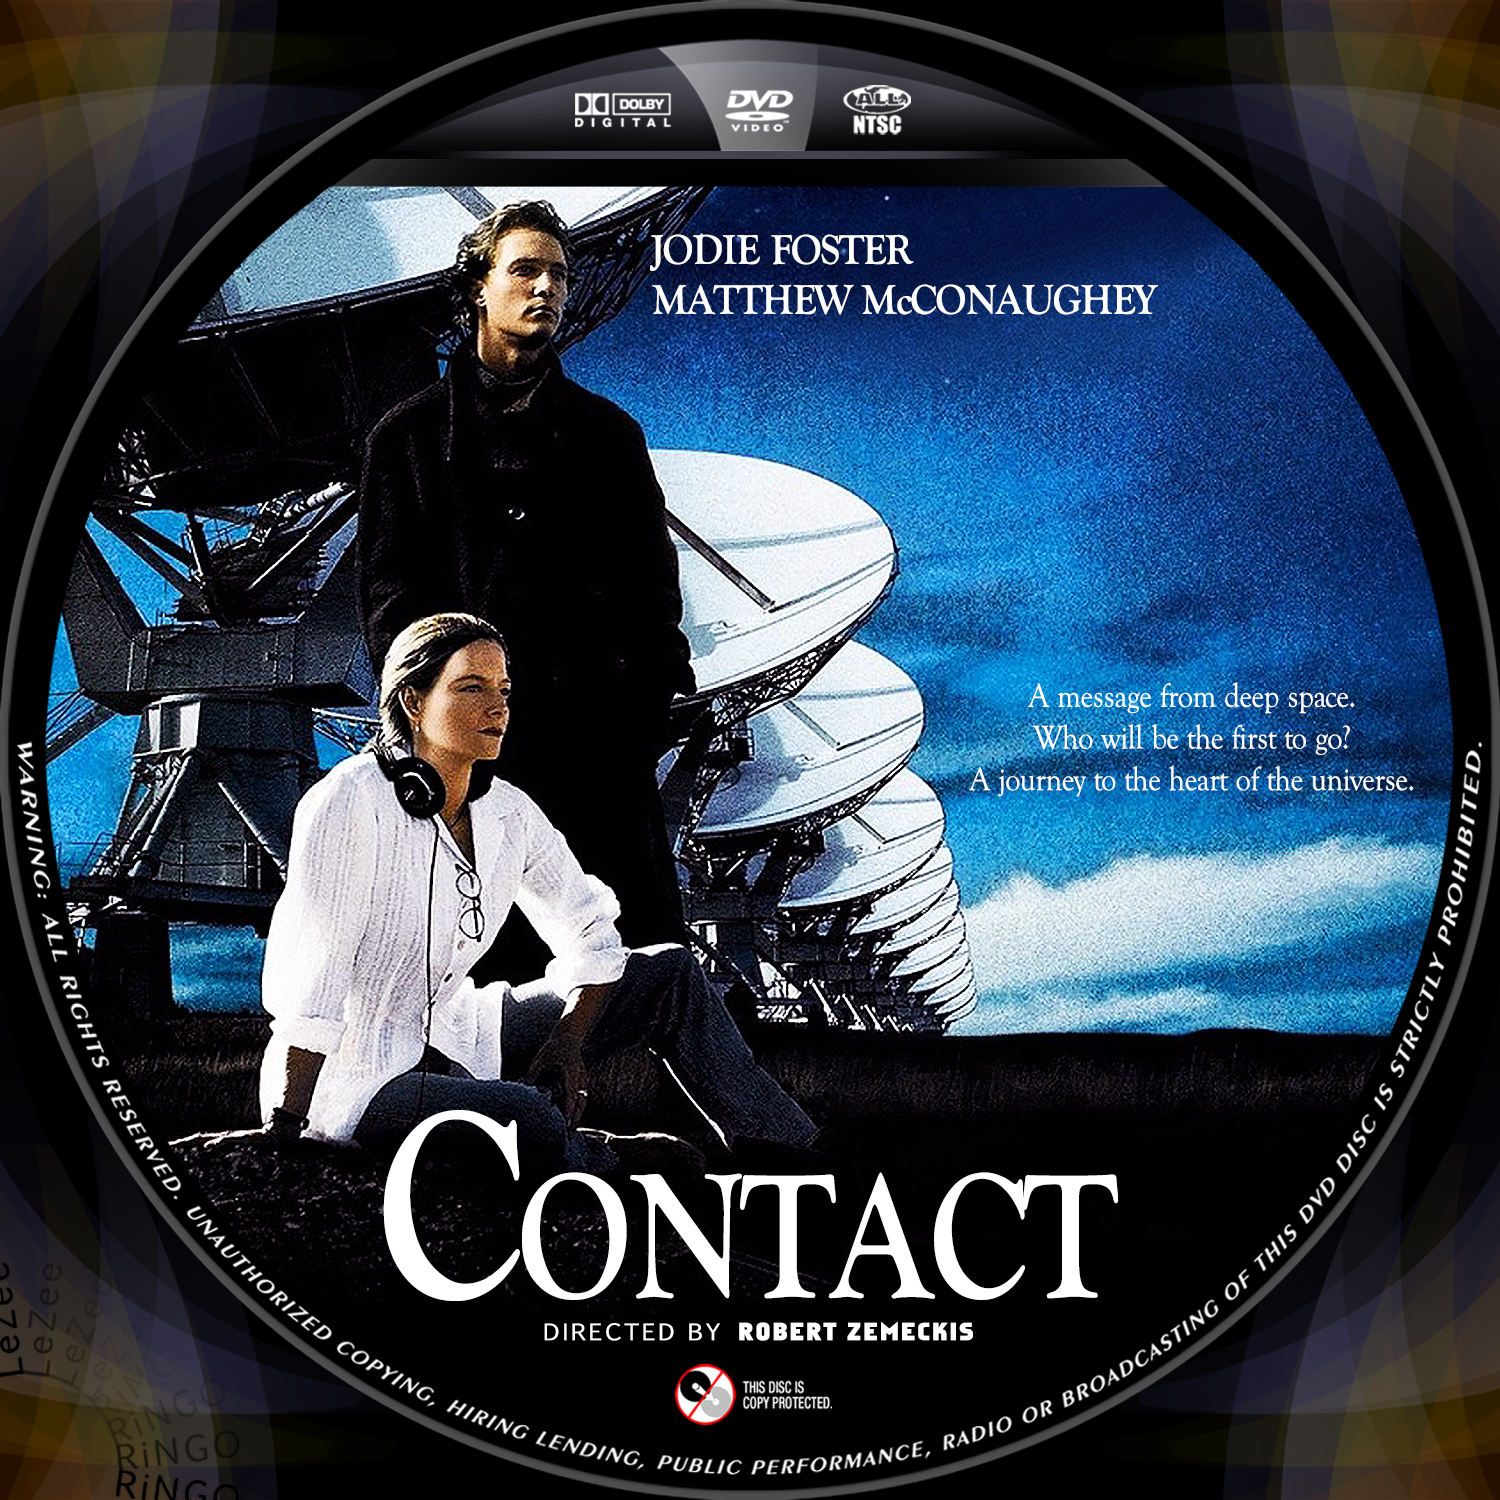 Stiahni si Filmy CZ/SK dabing Kontakt / Contact (1997)(CZ/EN)[1080p] = CSFD 82%